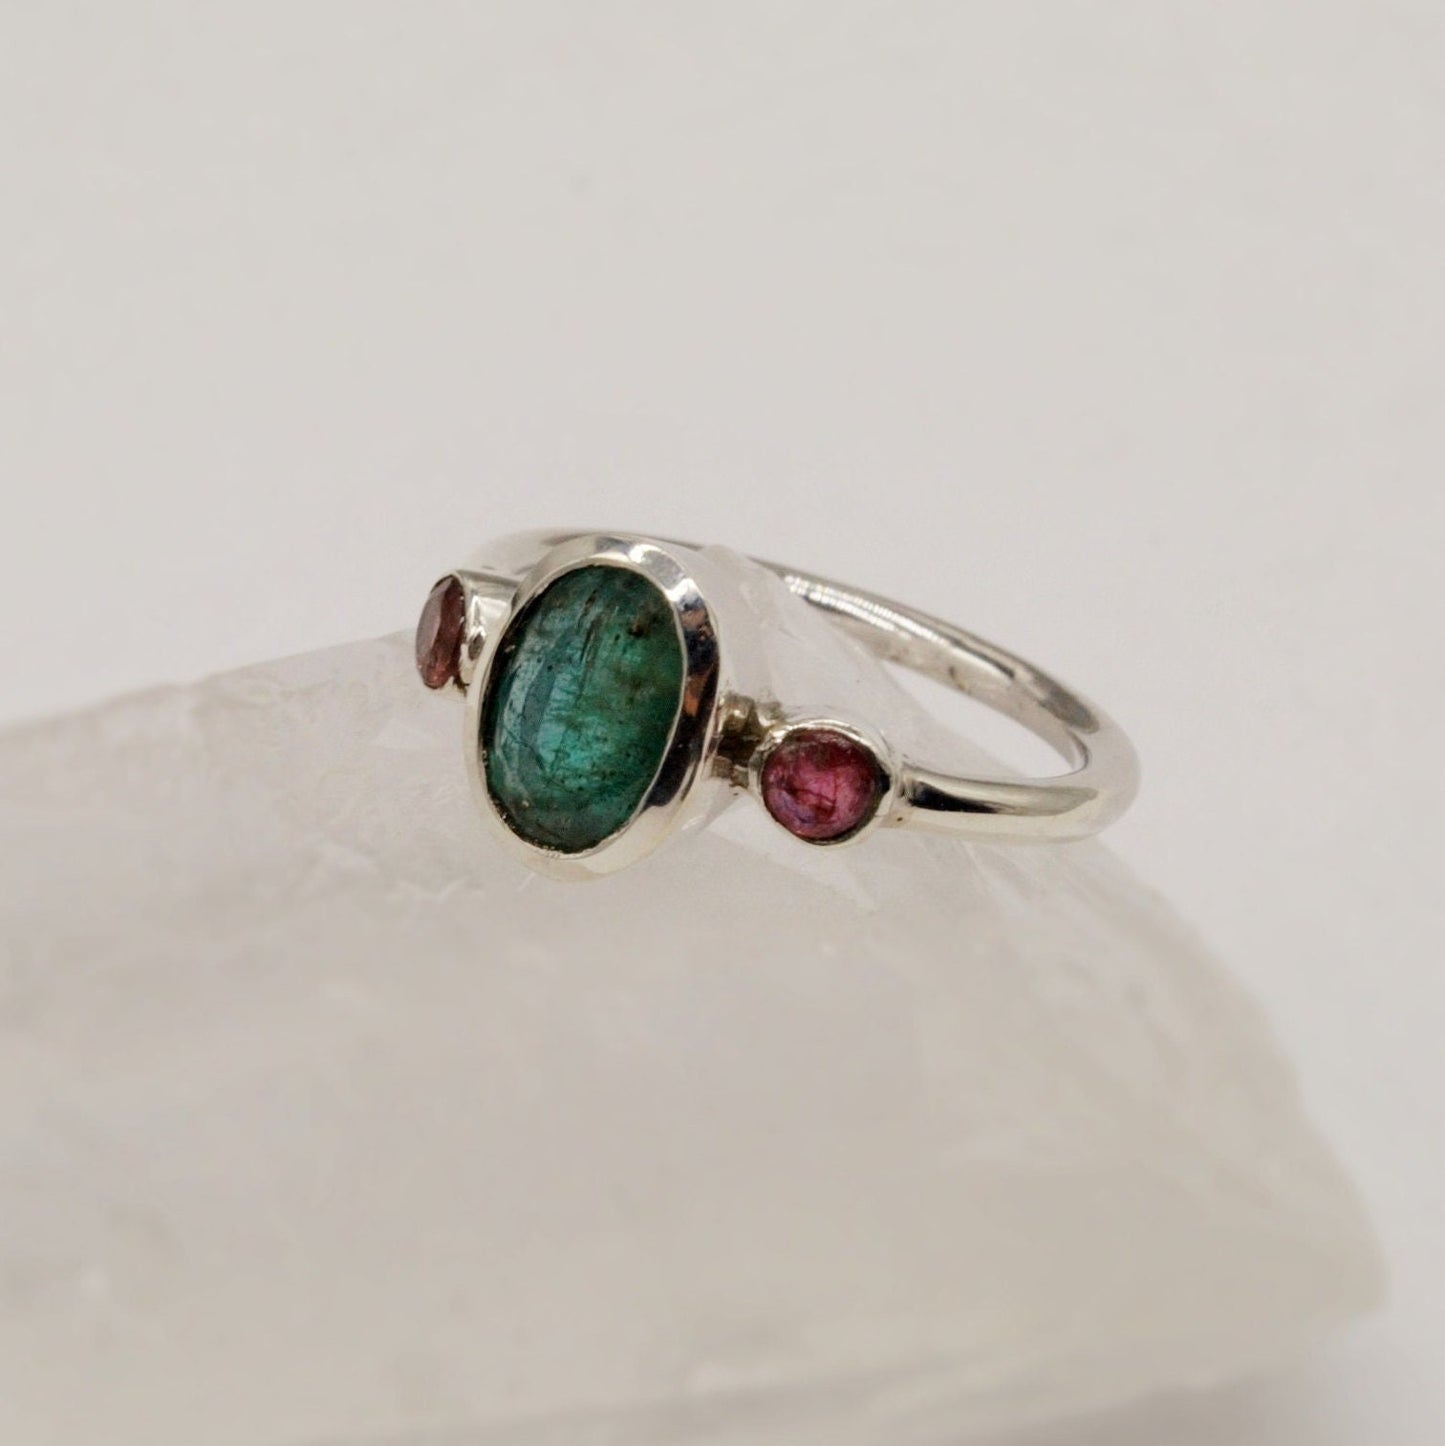 Emerald, Pink Tourmaline Ring, 925 Sterling Silver, Green Gemstone, May, October Birthstone, Dainty Gem Ring, Birthday Gift For Her